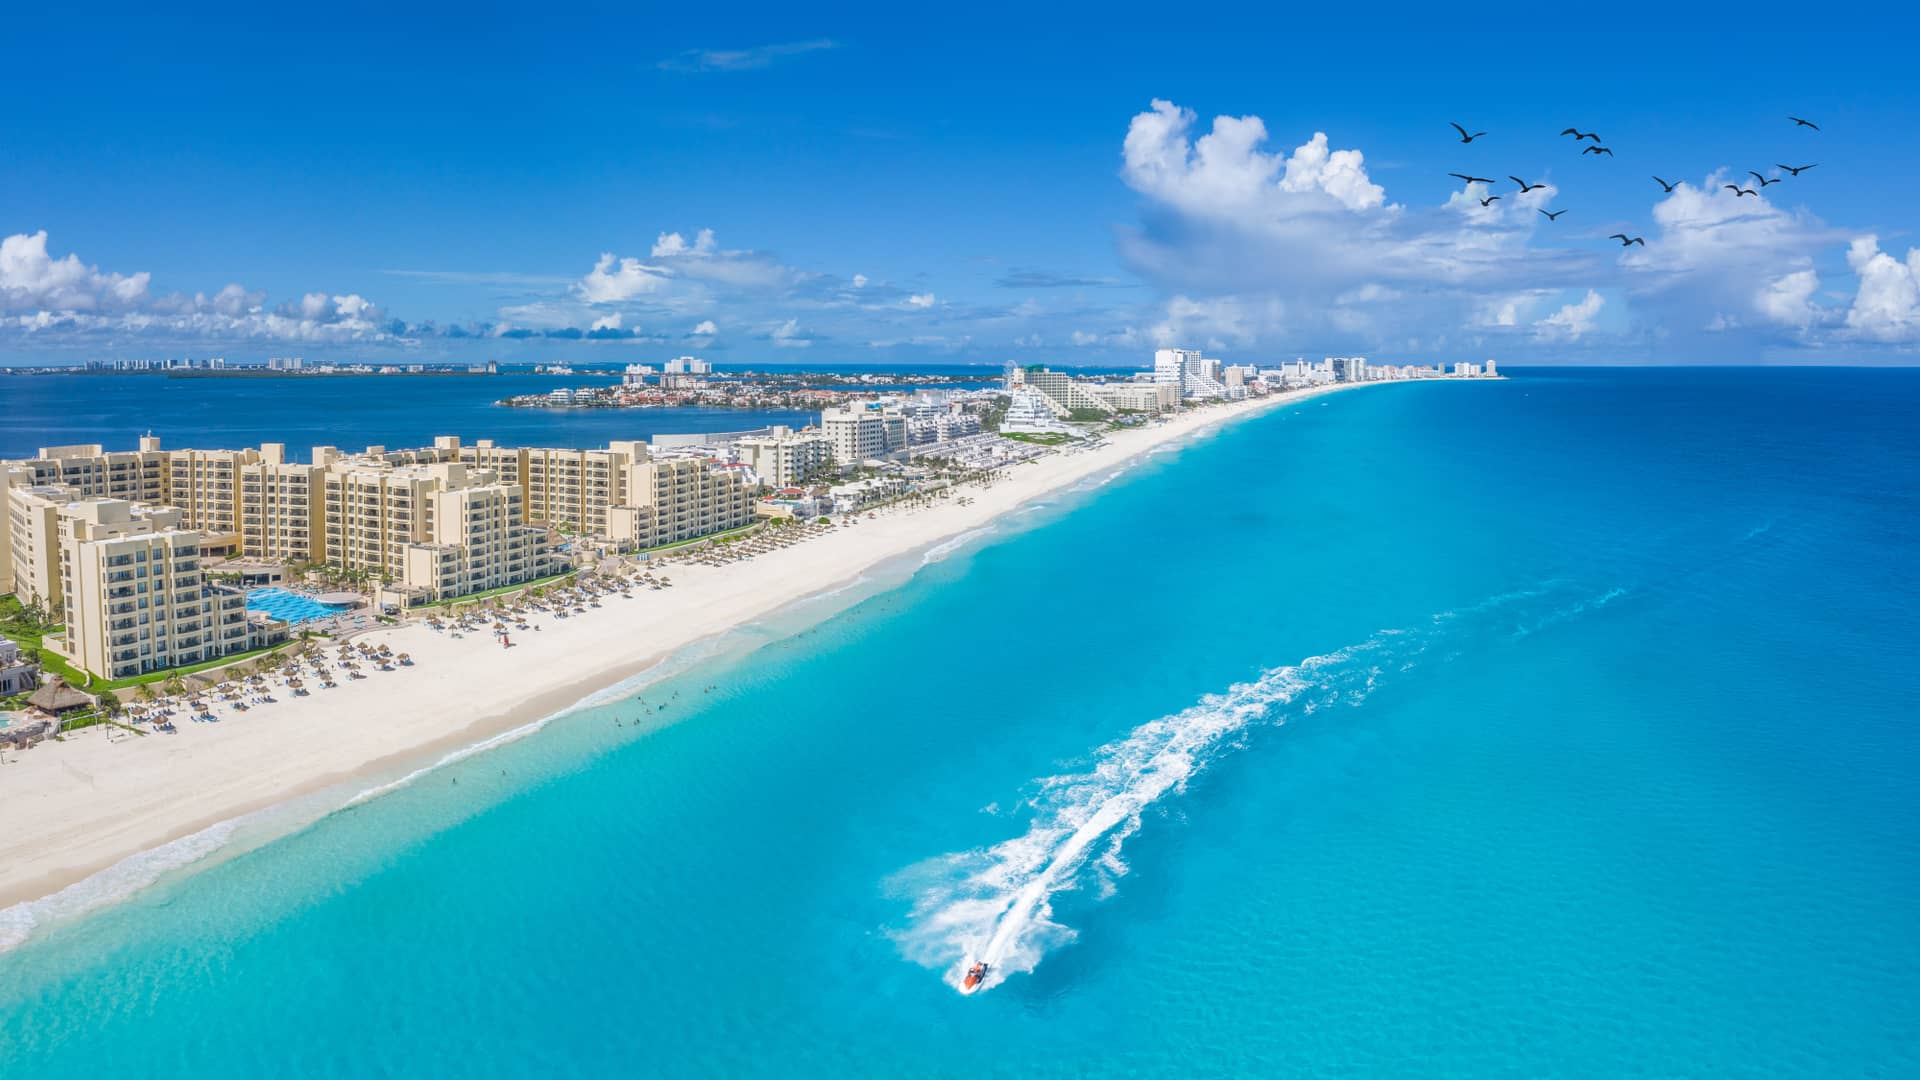 Cancun, a world-class destination for corporate events.